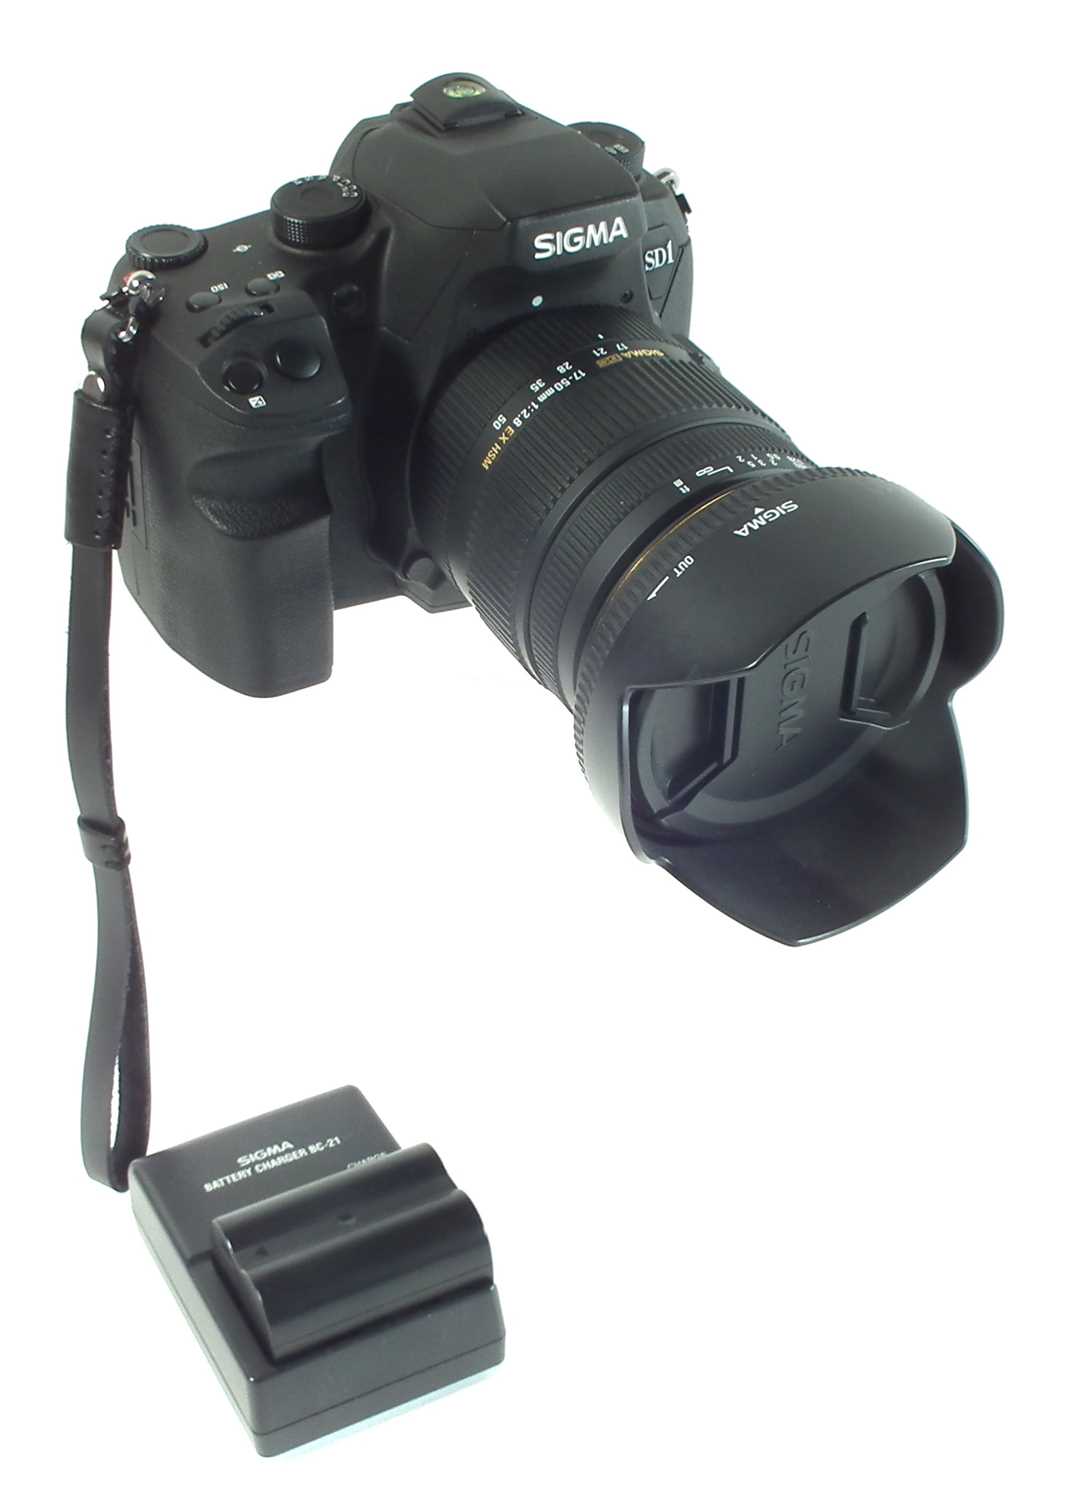 Lot 186 - Sigma SD1 SLR camera